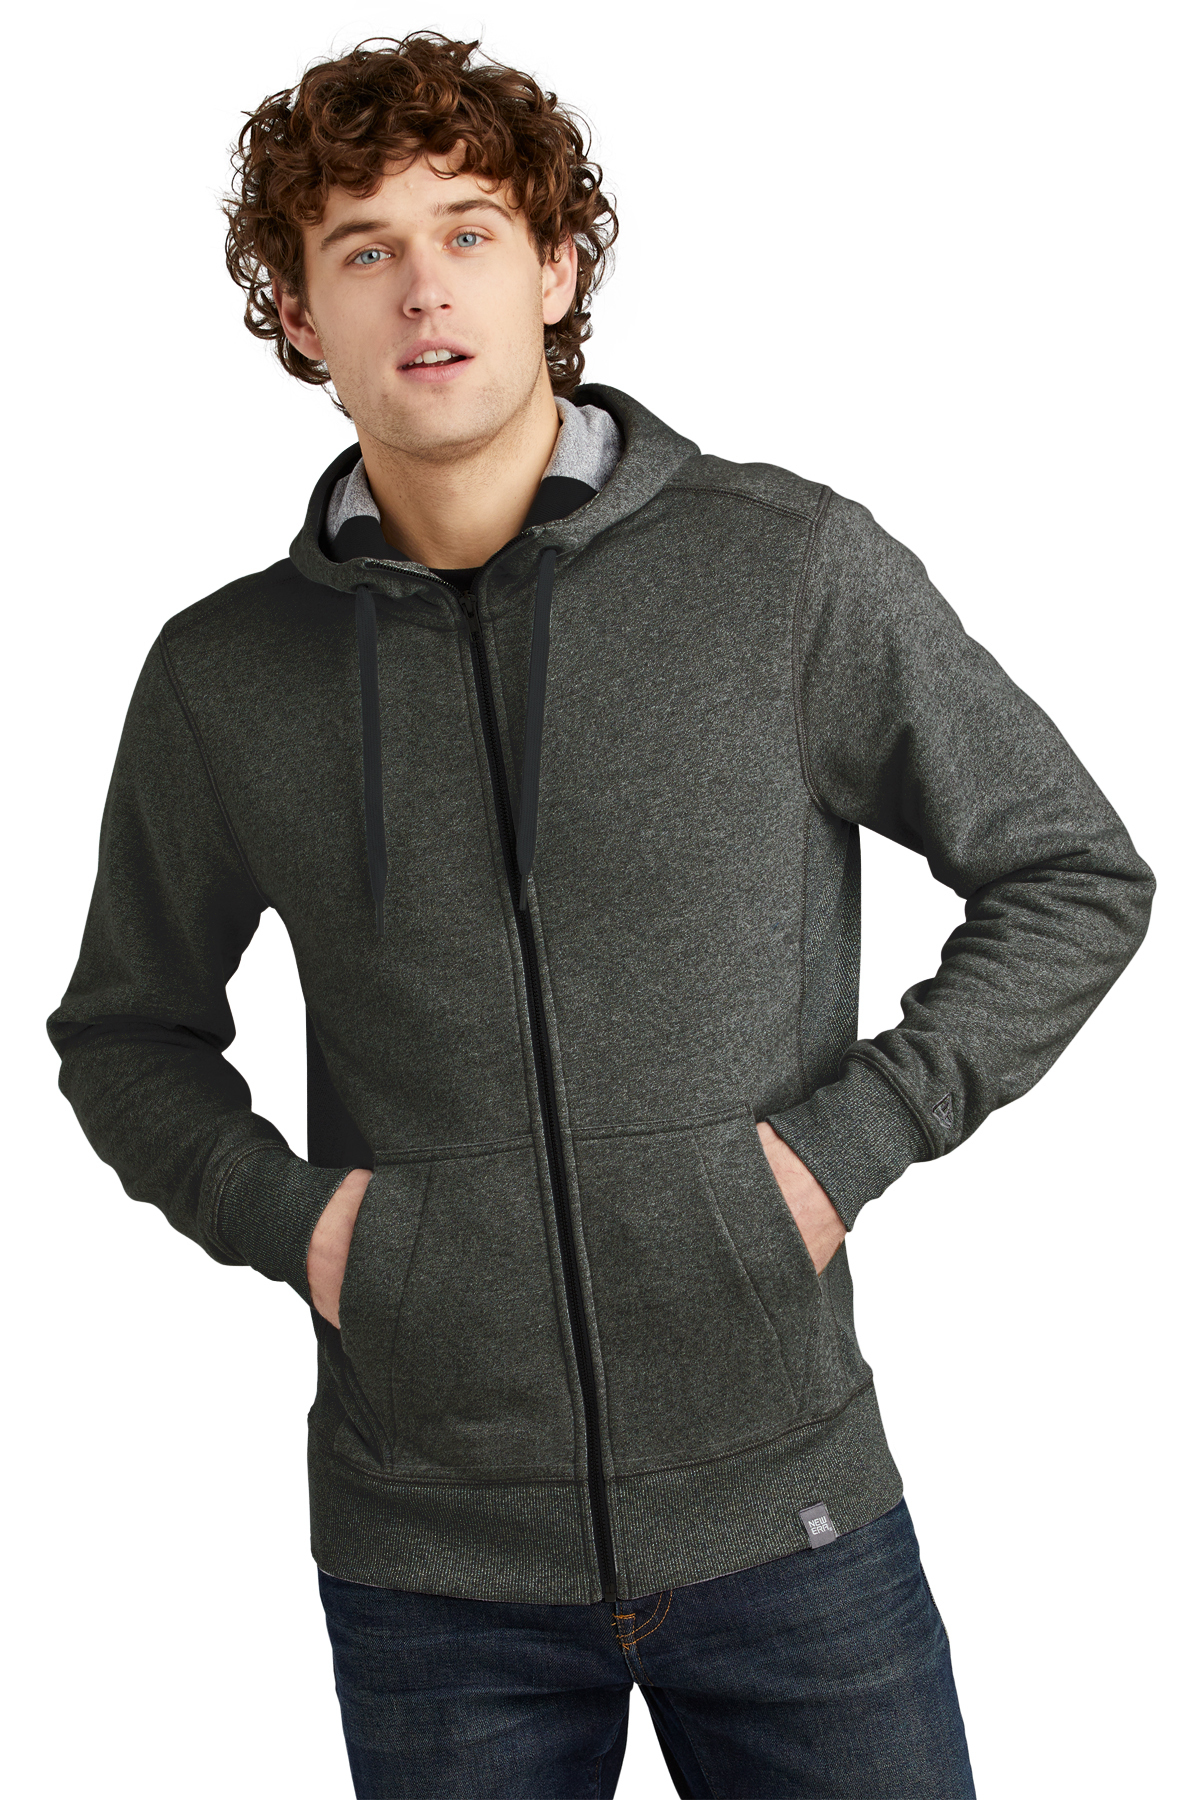 Threadfast Apparel Unisex Ultimate Fleece Full-Zip Hooded Sweatshirt